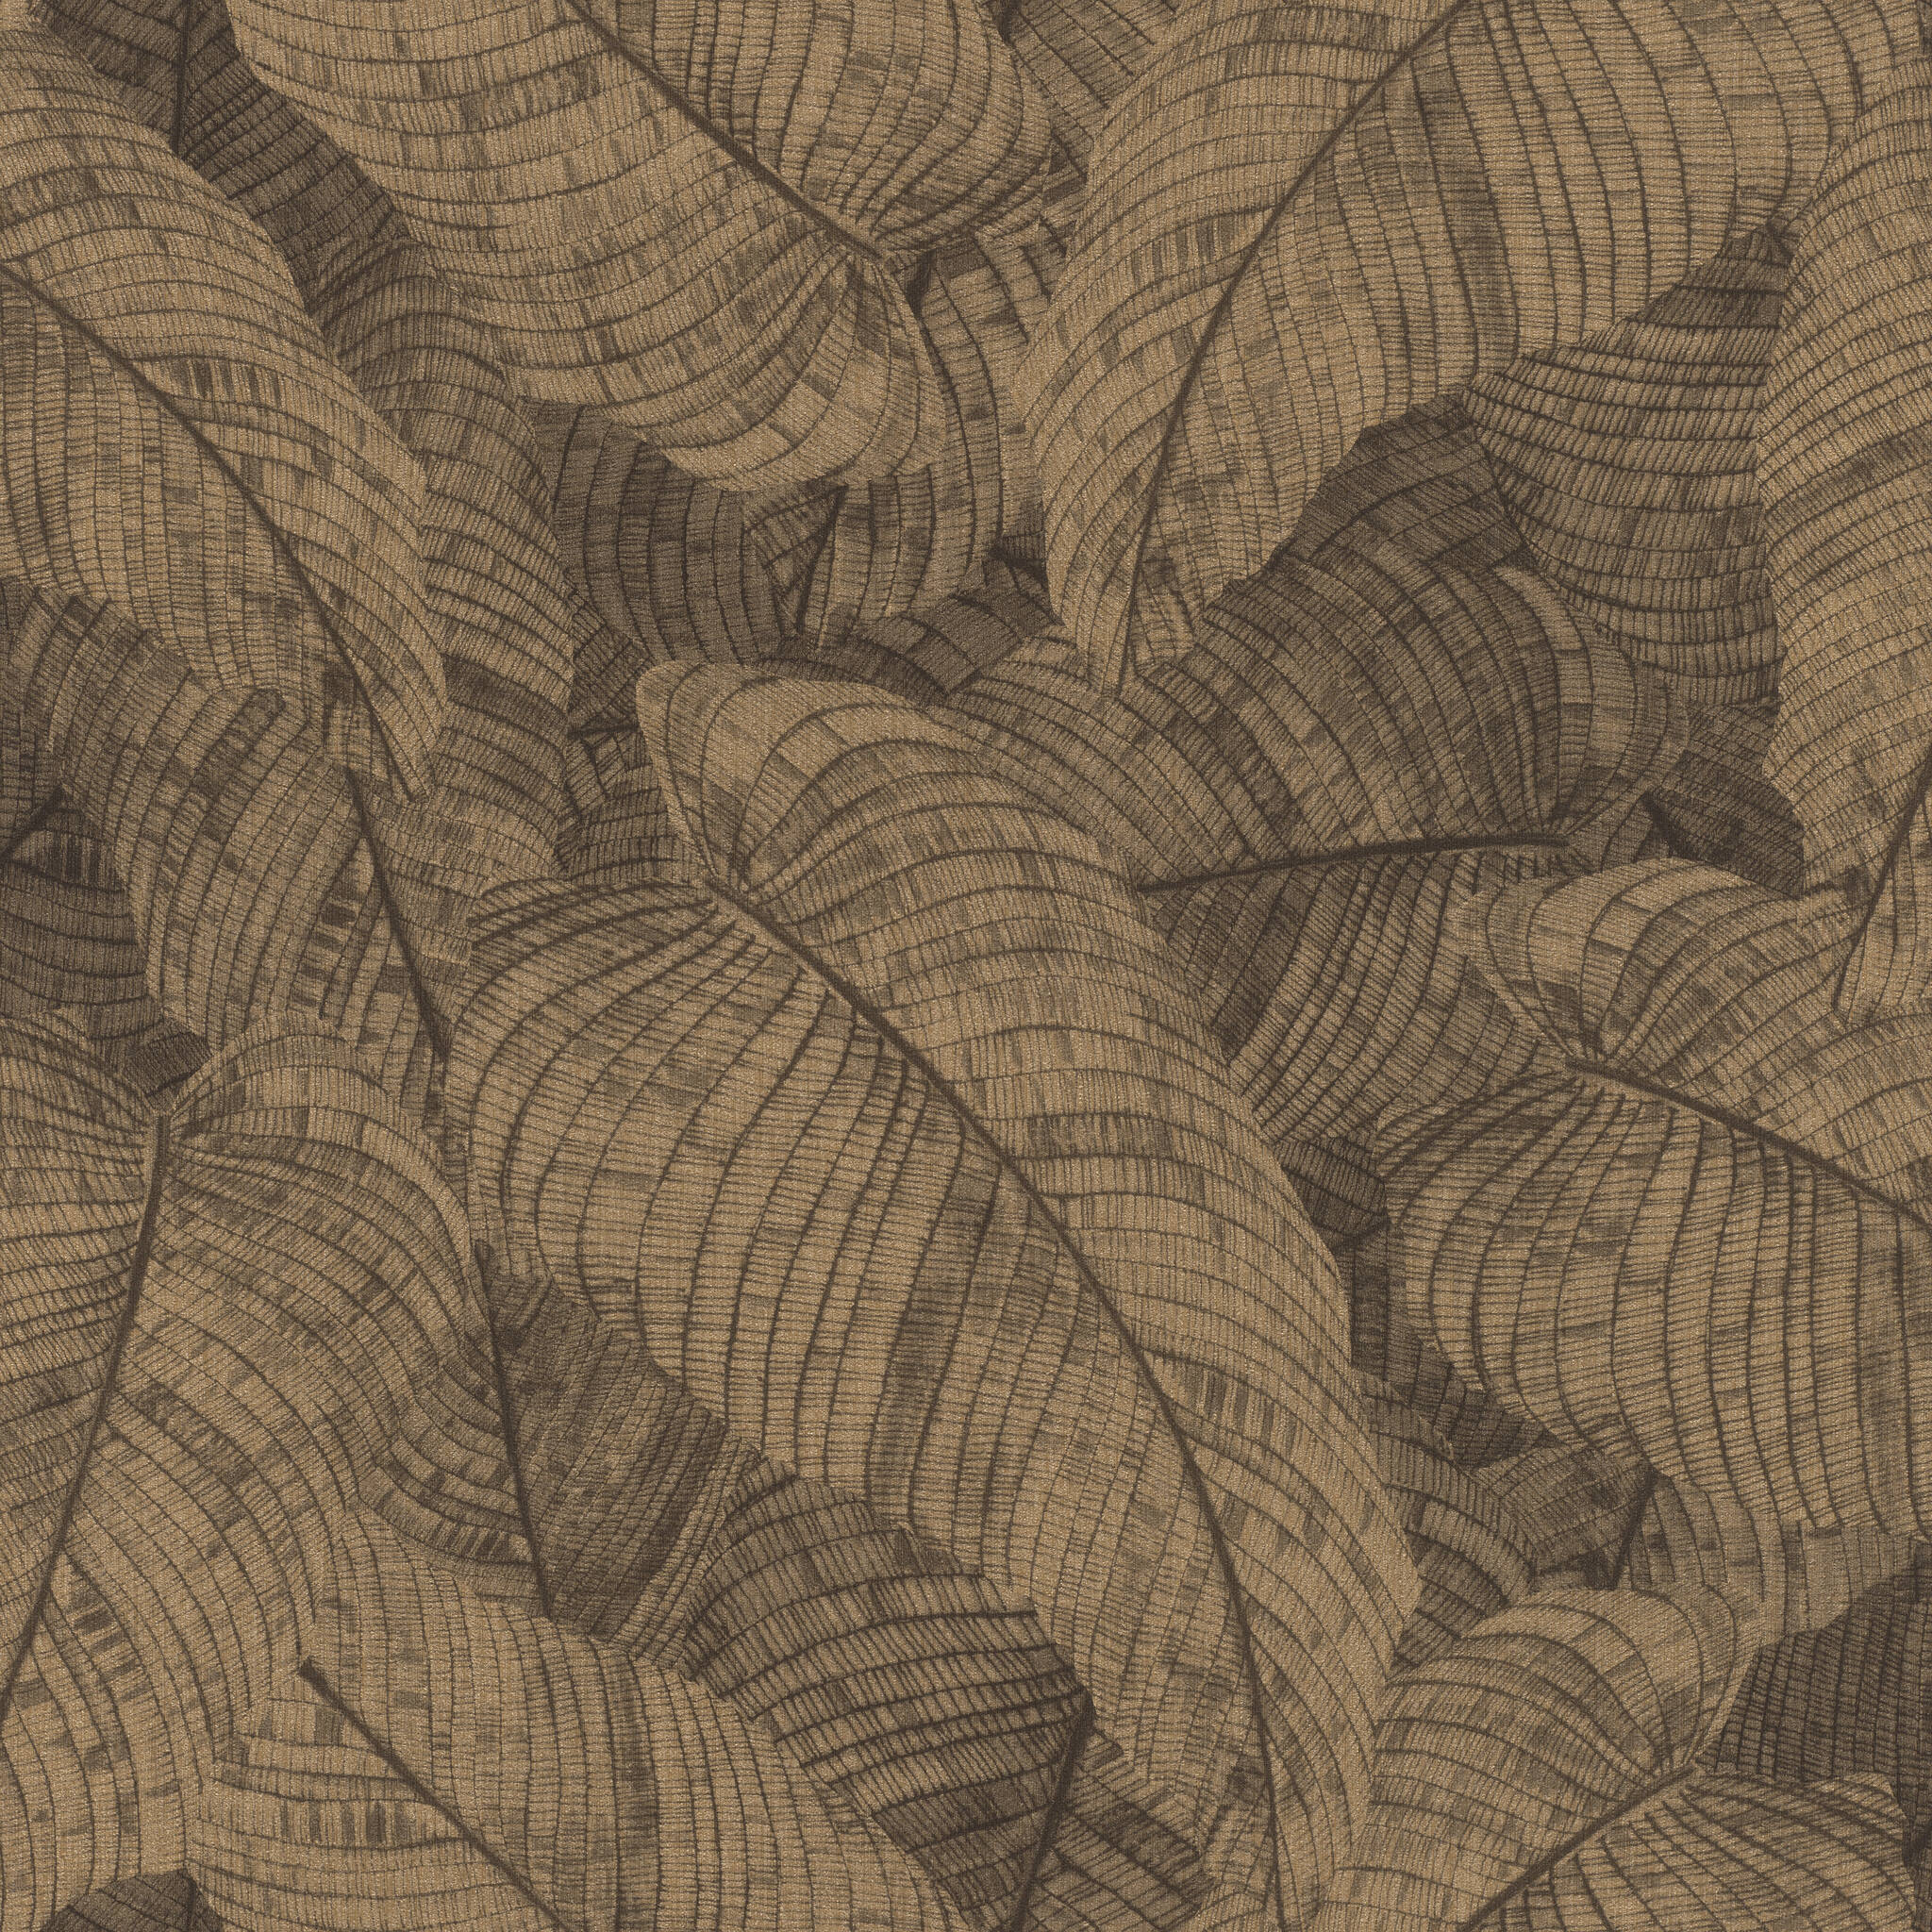 Blätter Vliestapete in Braun-Messing hell Amara 720570